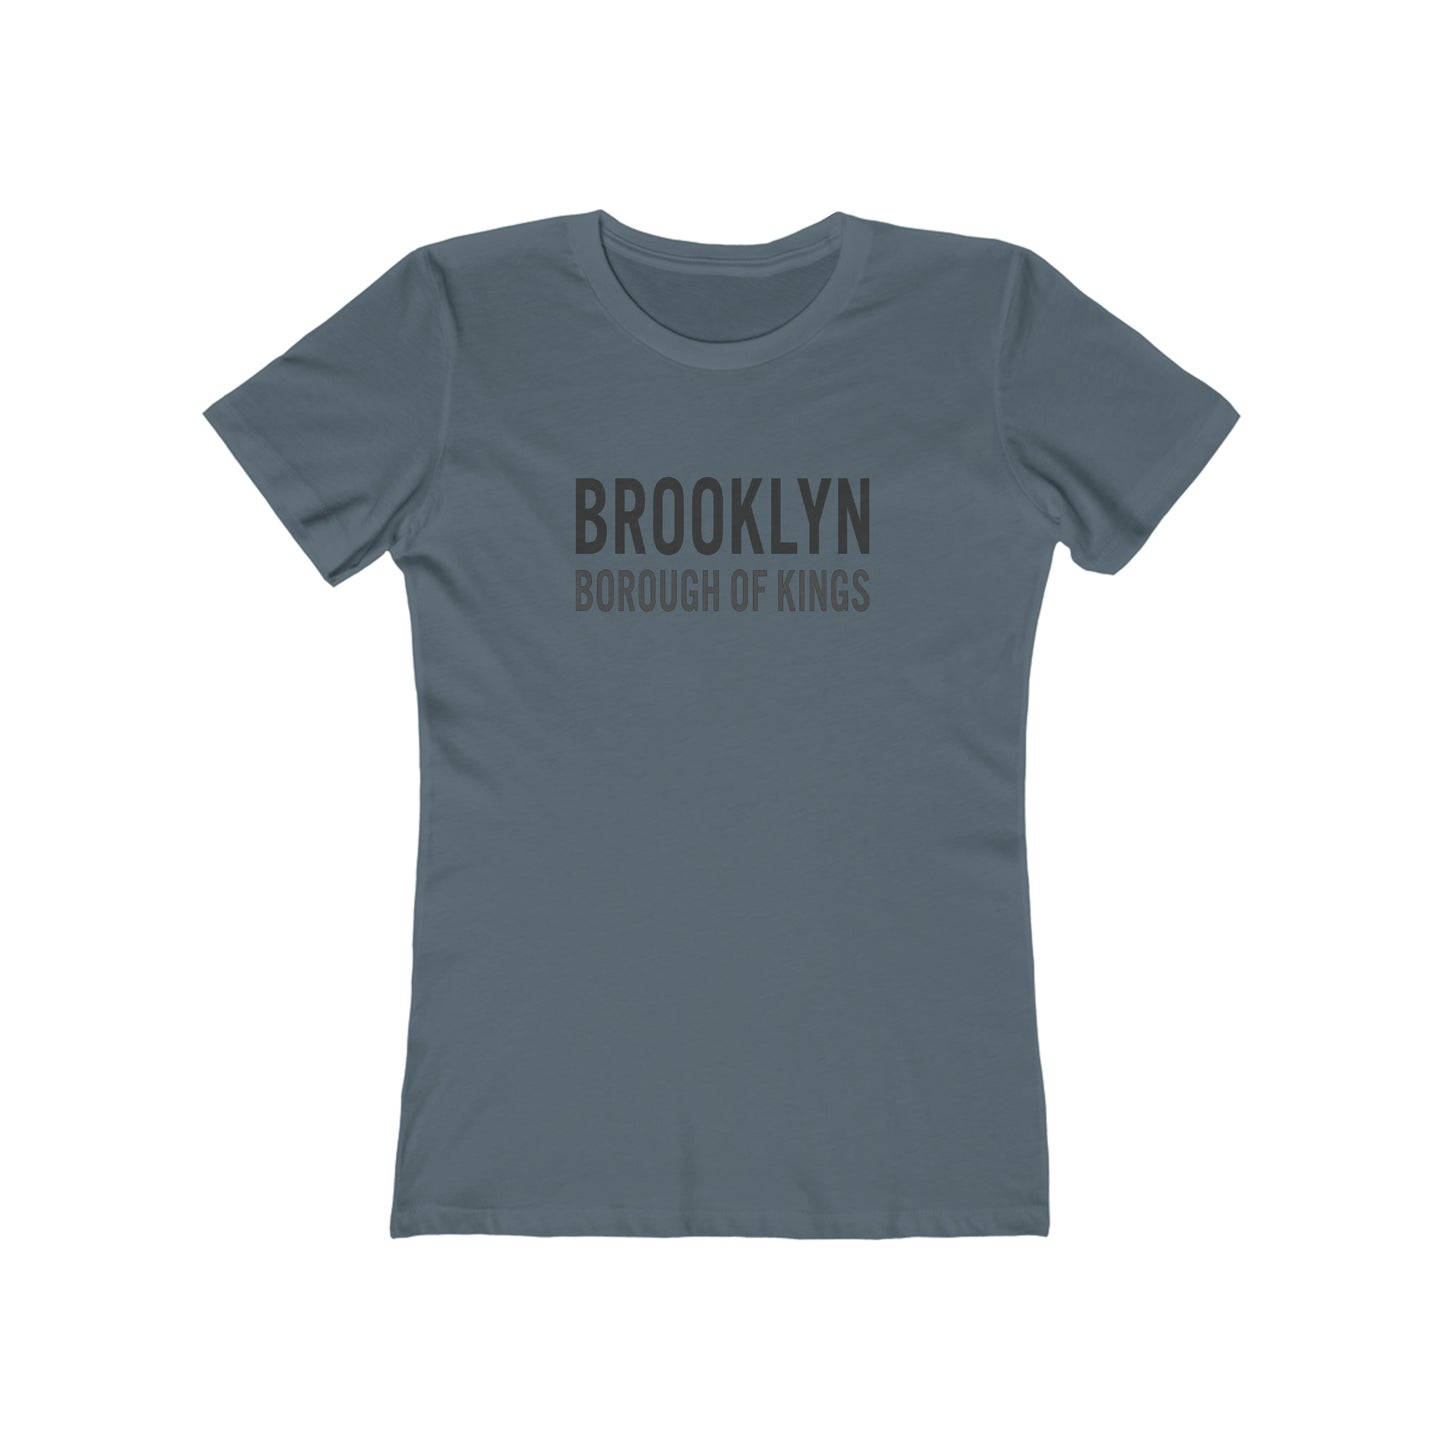 Brooklyn Borough of Kings - Women's T-Shirt